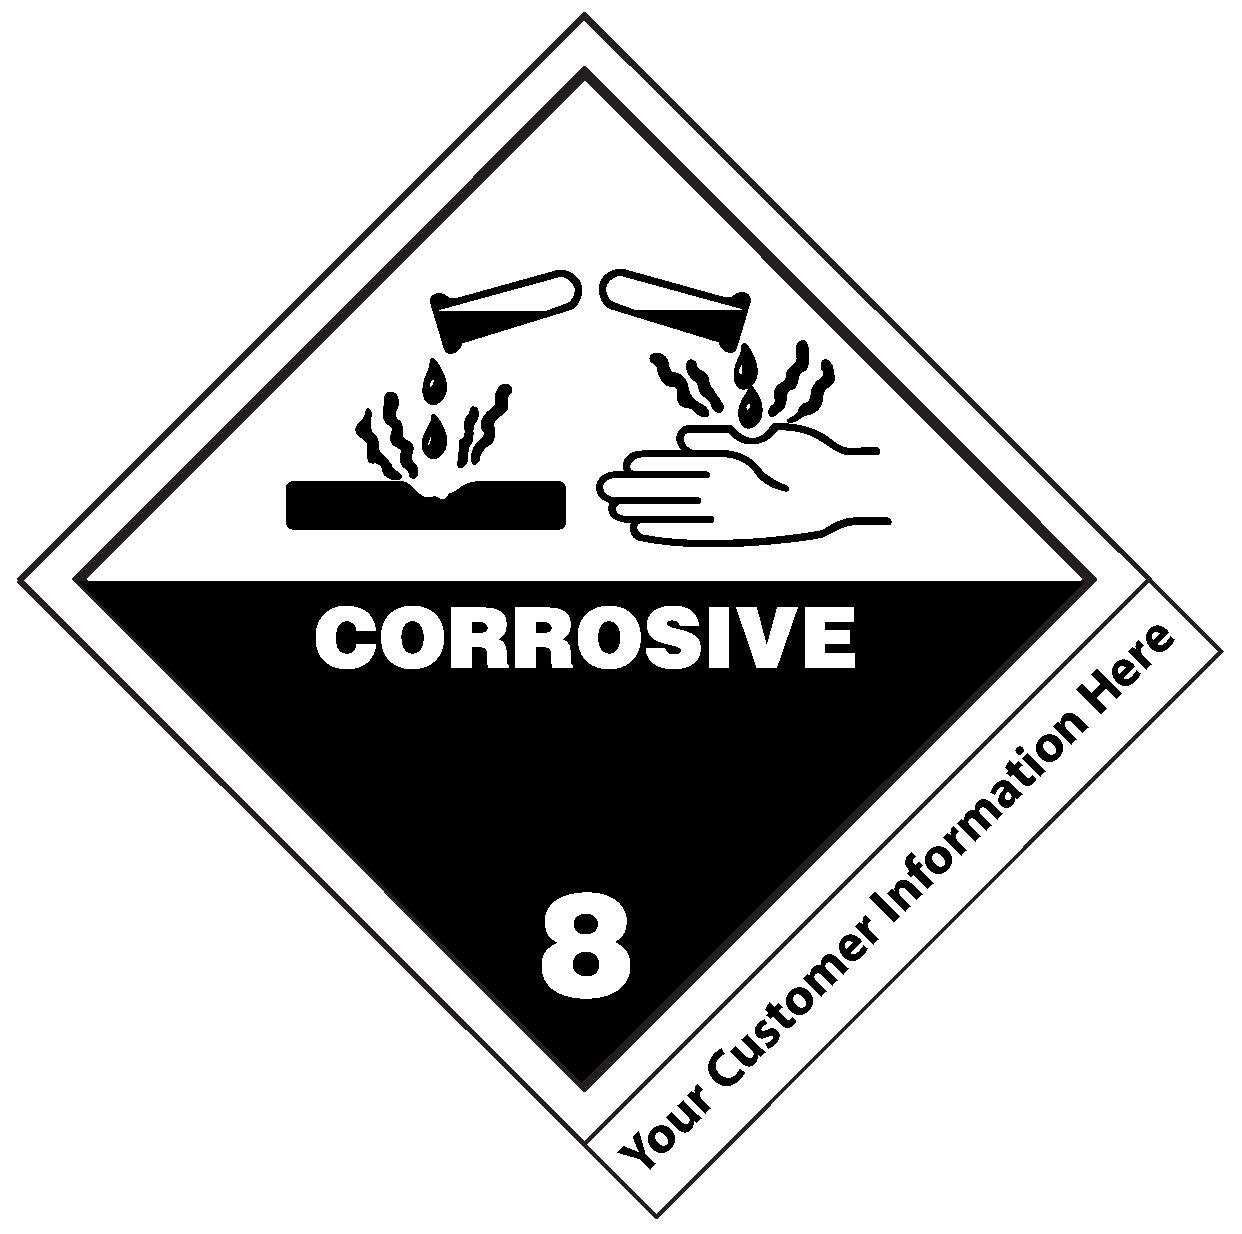 Corrosive Class 8 w/ IMPRINT